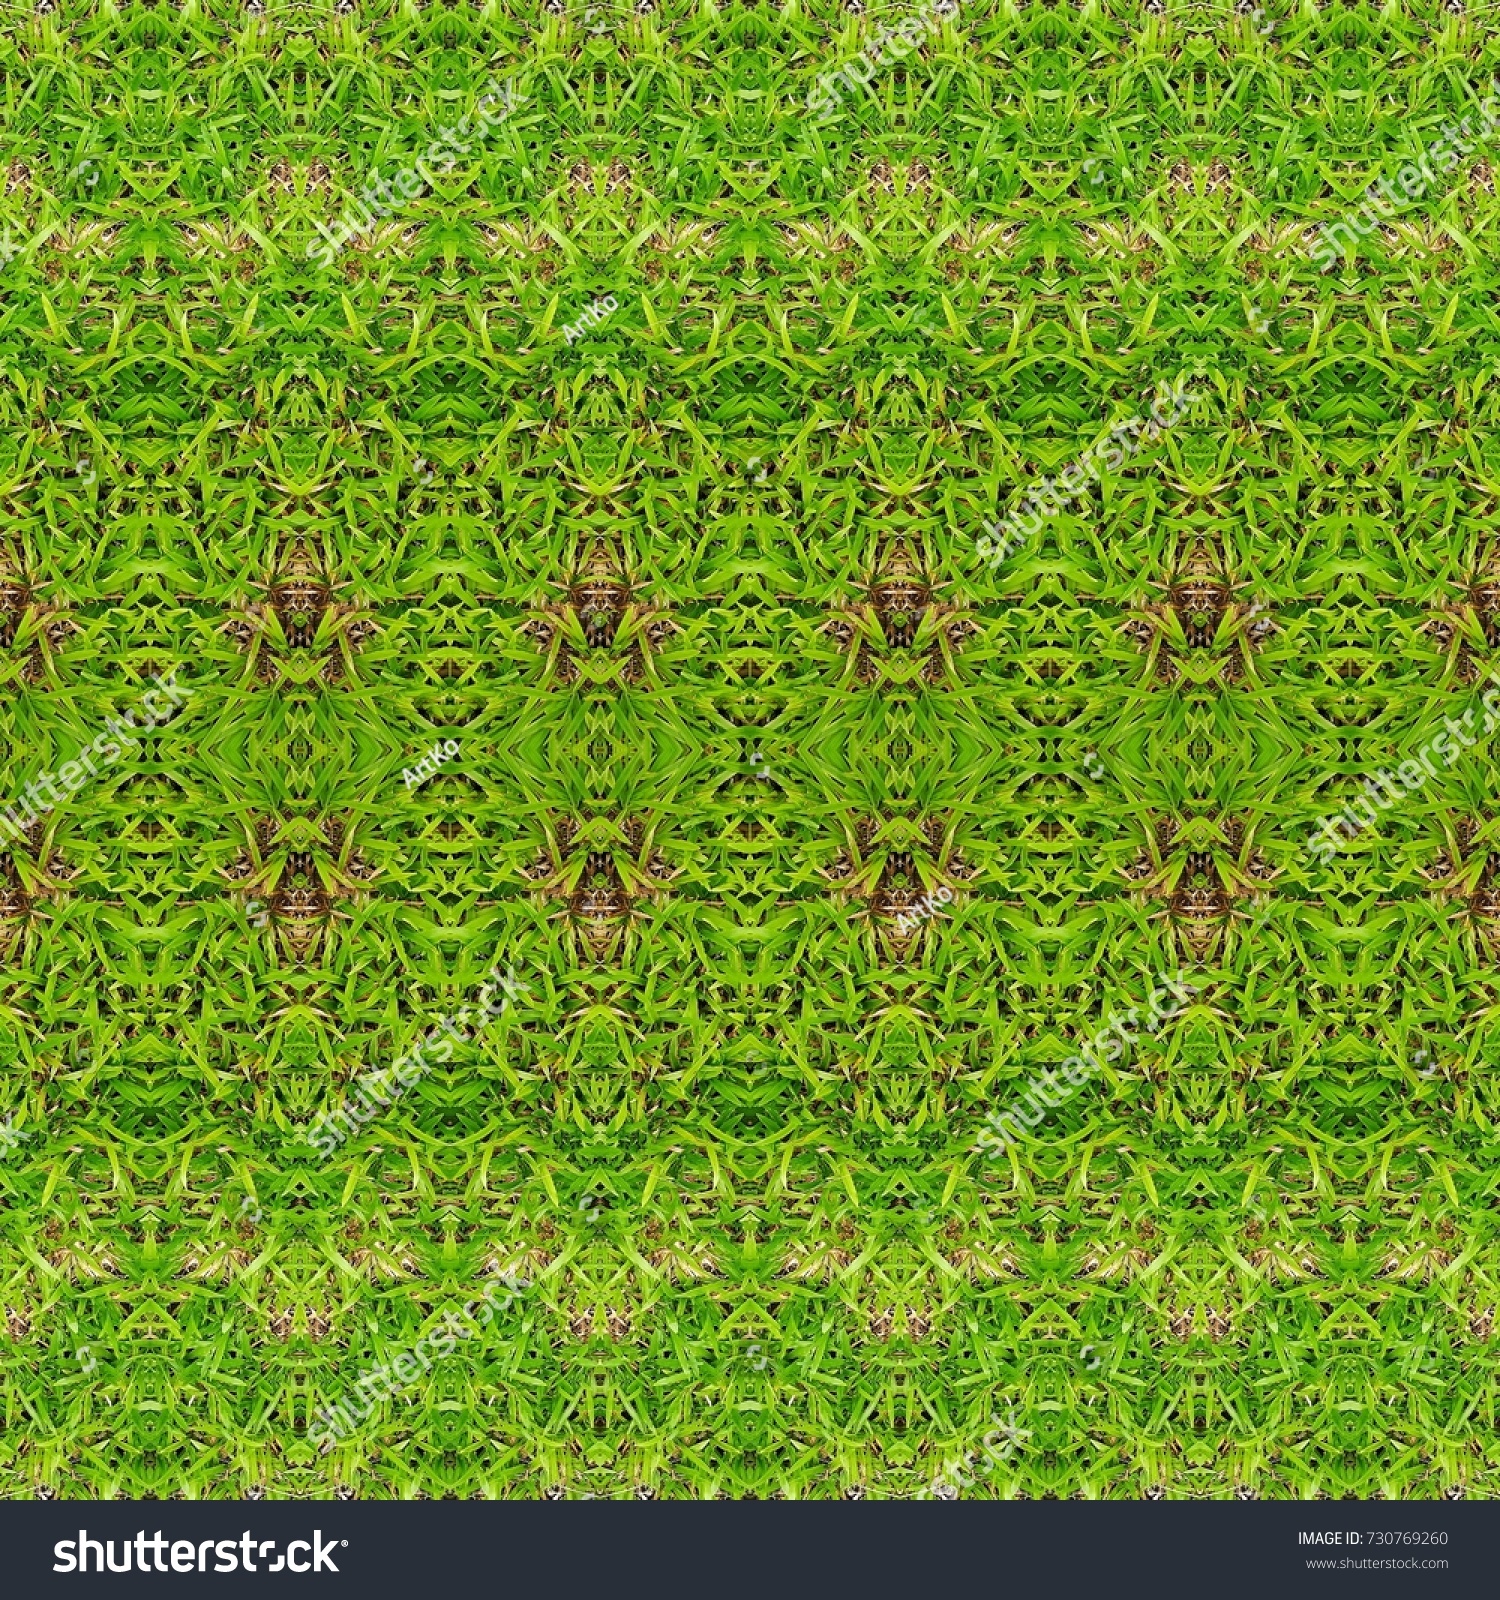 Abstract Green Grass Texture Art Design Stock Illustration 730769260 ...